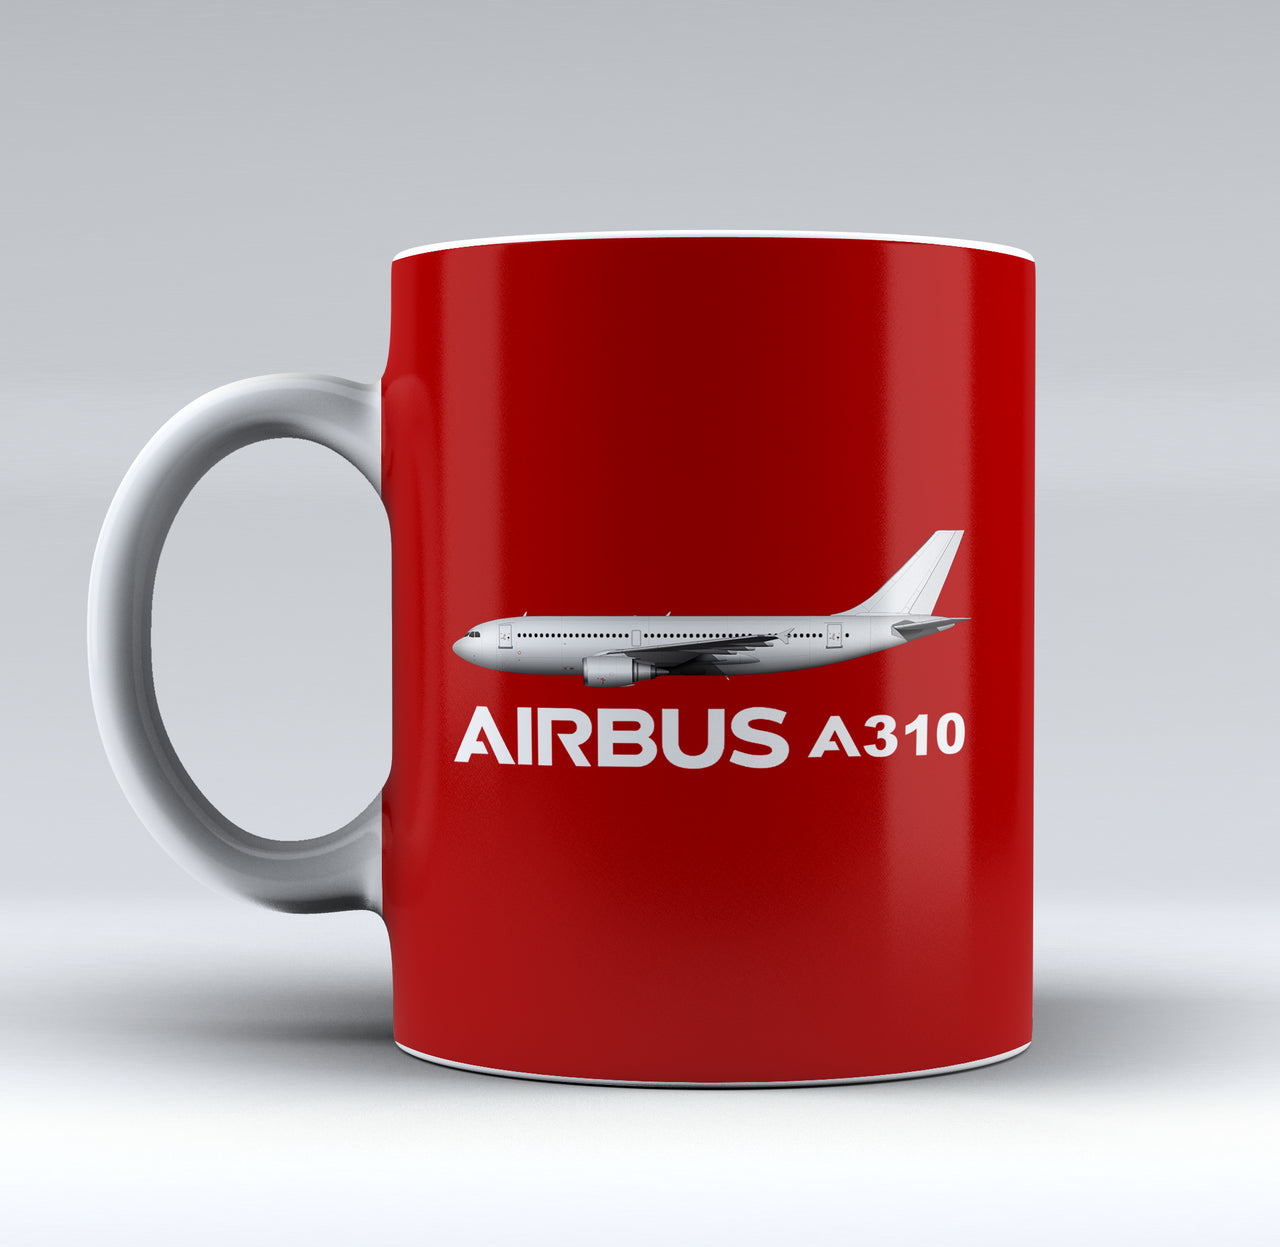 The Airbus A310 Designed Mugs